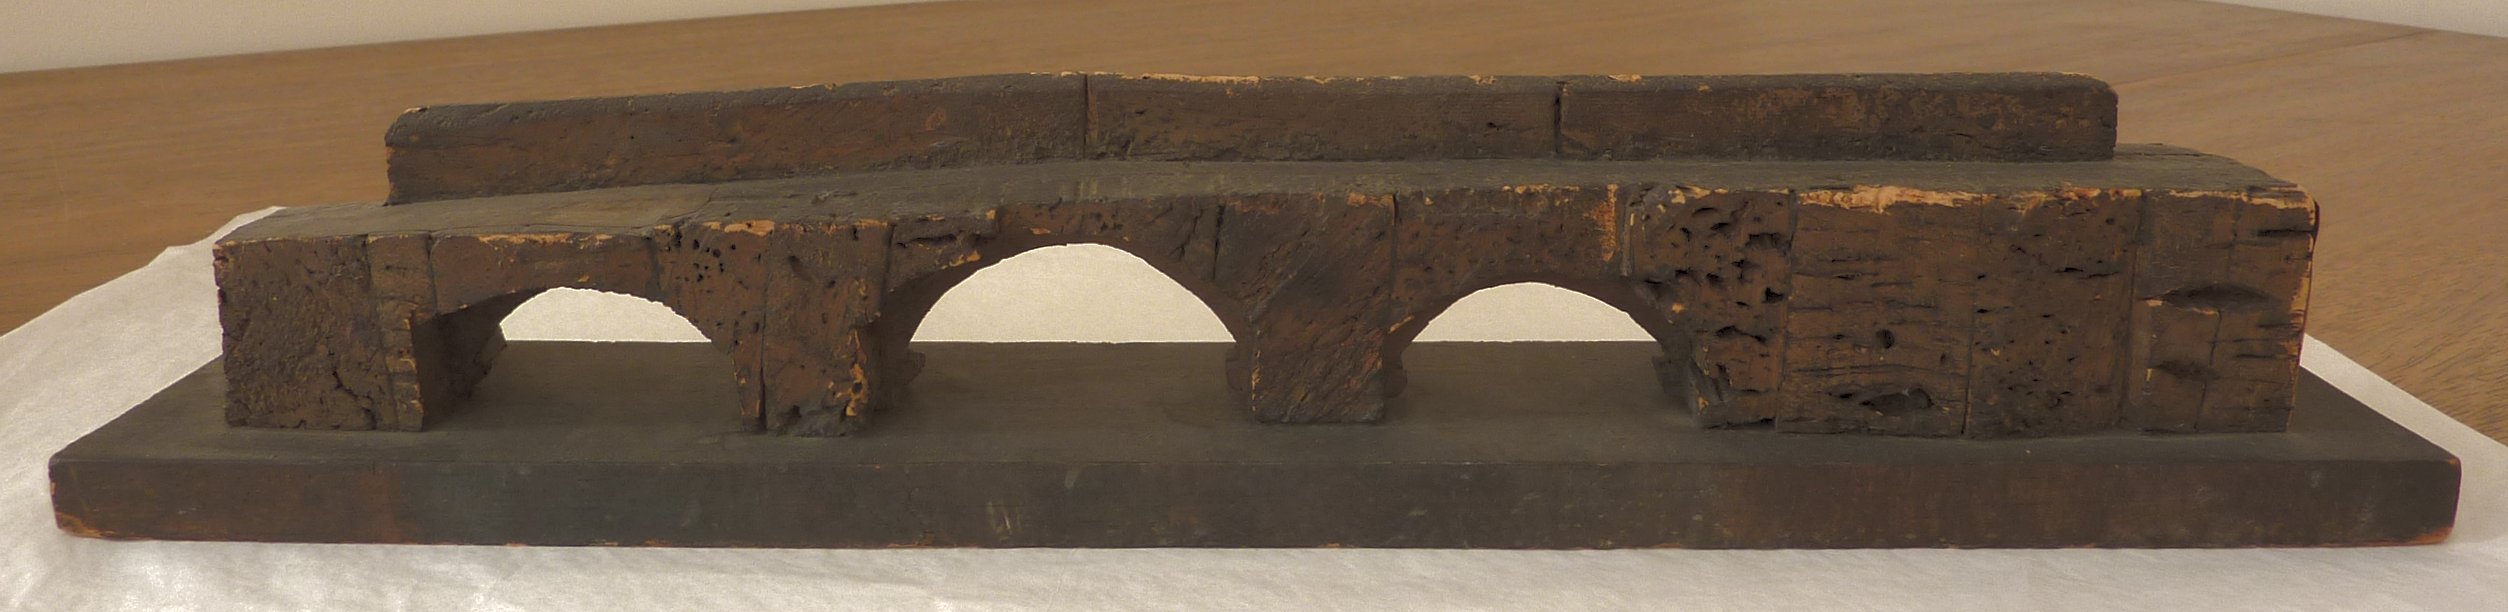 Folly Bridge cork model, 1878, Ashmolean